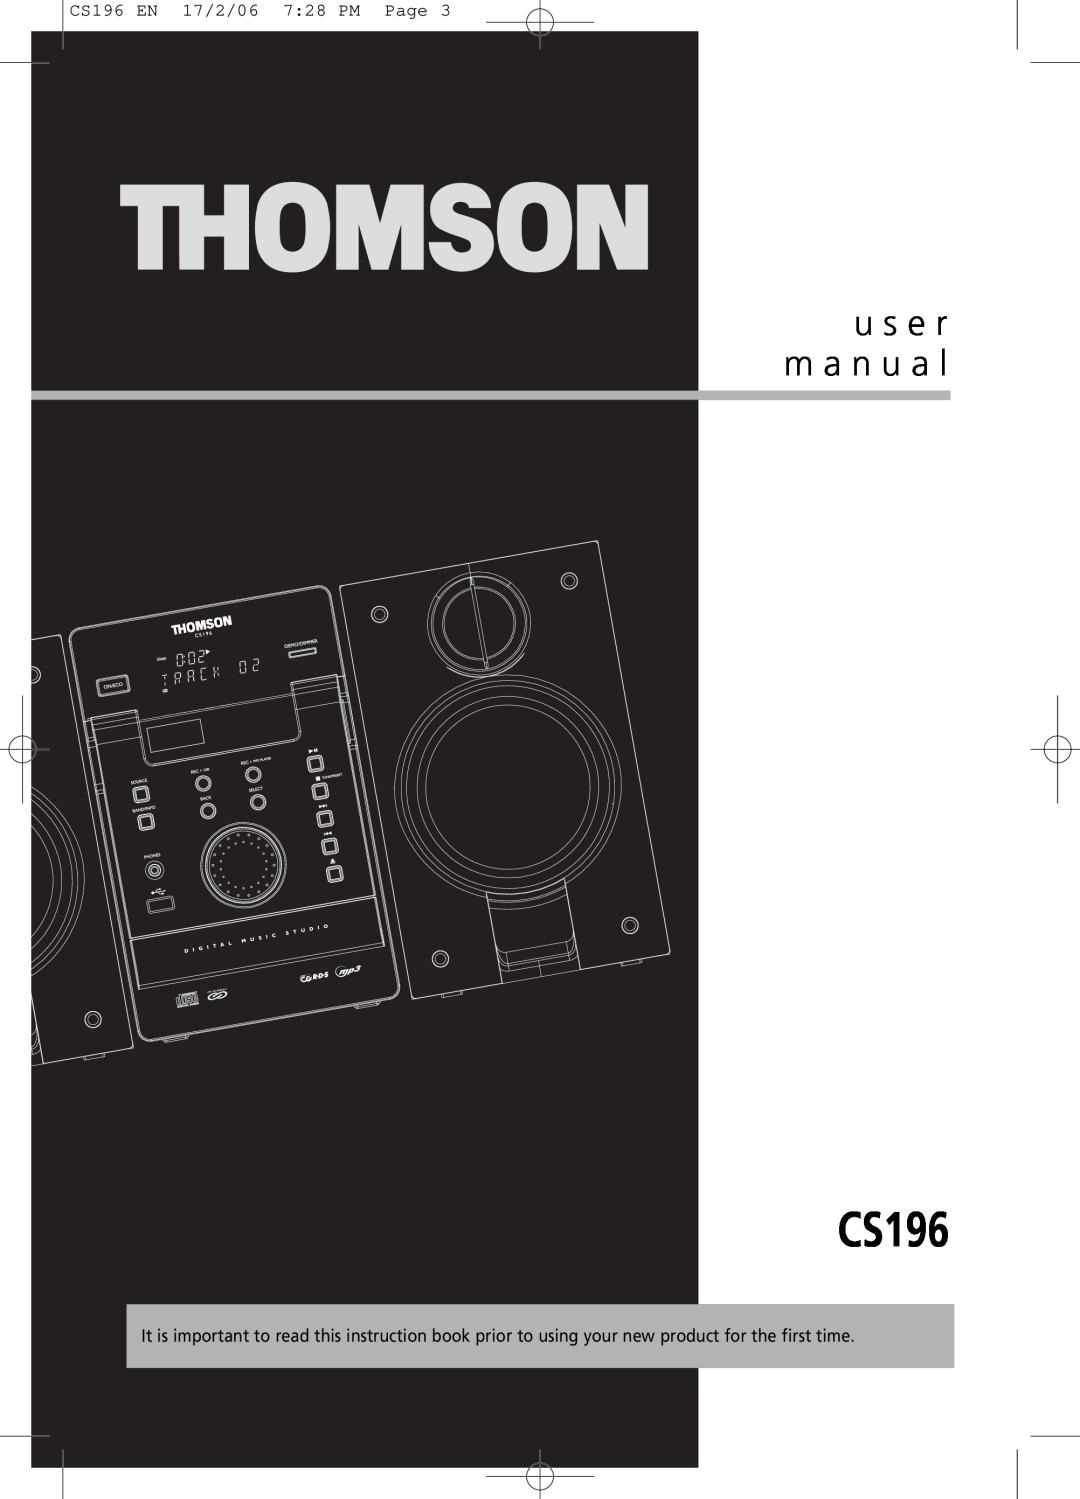 Technicolor - Thomson user manual u s e r m a n u a l, CS196 EN 17/2/06 728 PM Page 